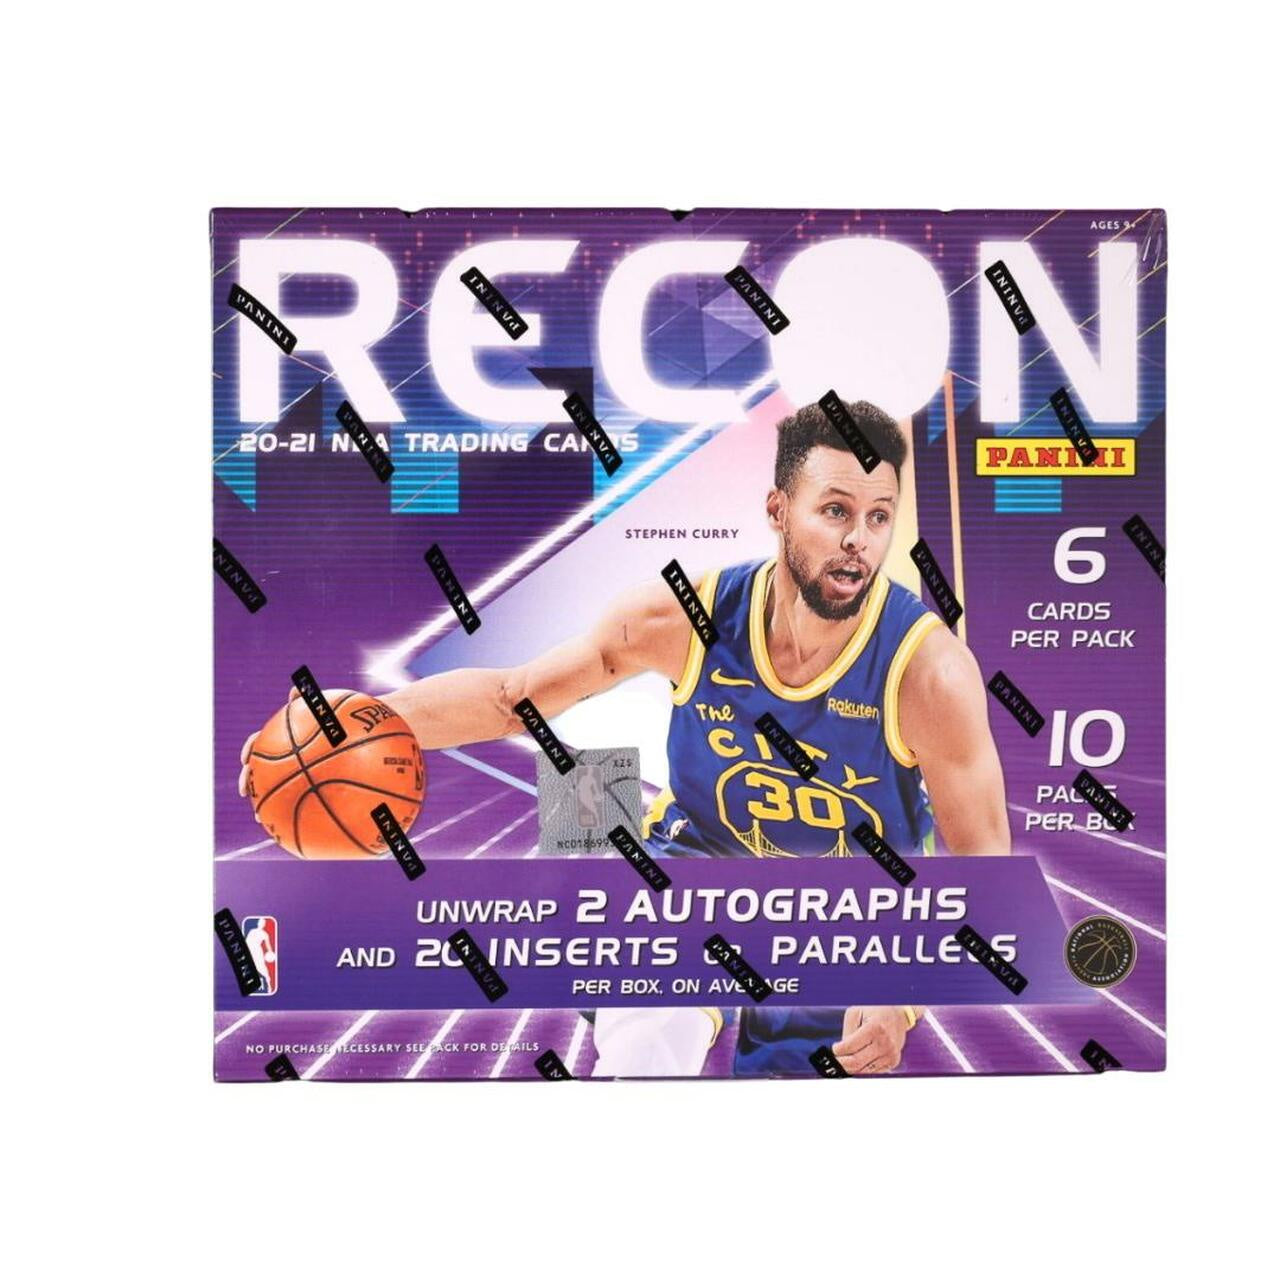 2020-21 Panini Recon Basketball Hobby Box - Miraj Trading